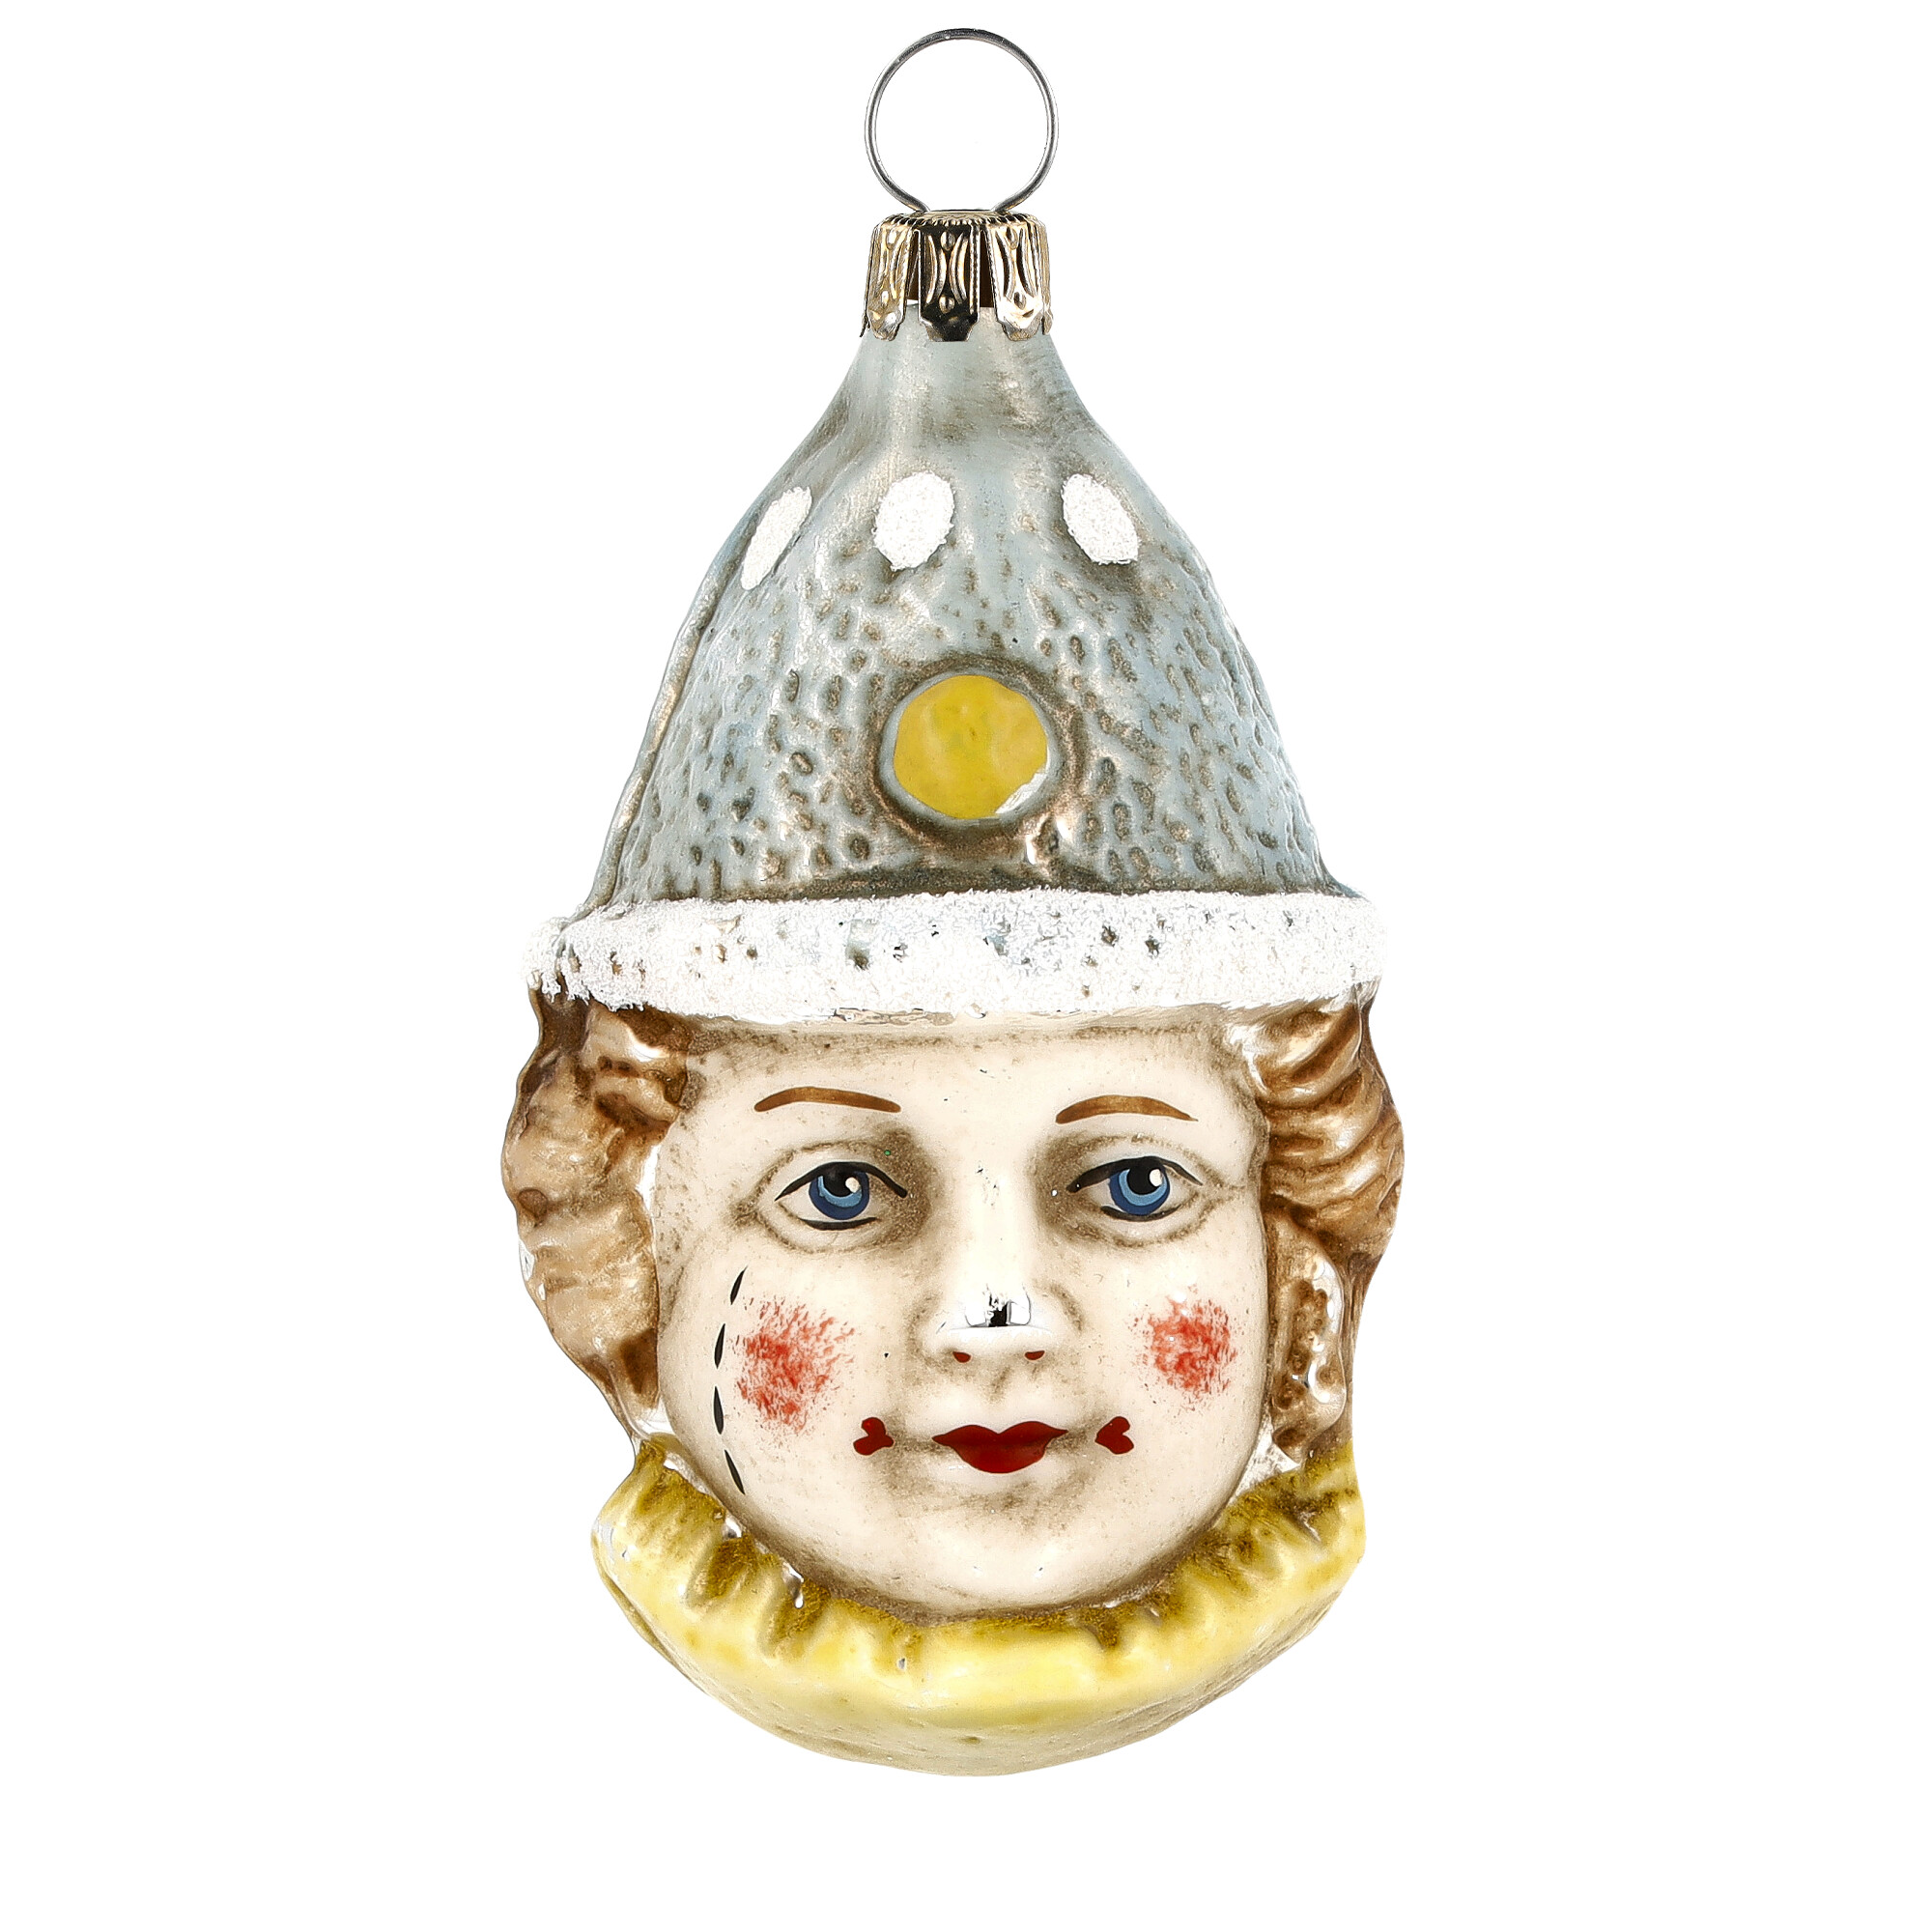 Retro Vintage style Christmas Glass Ornament - Clown head with blue cap